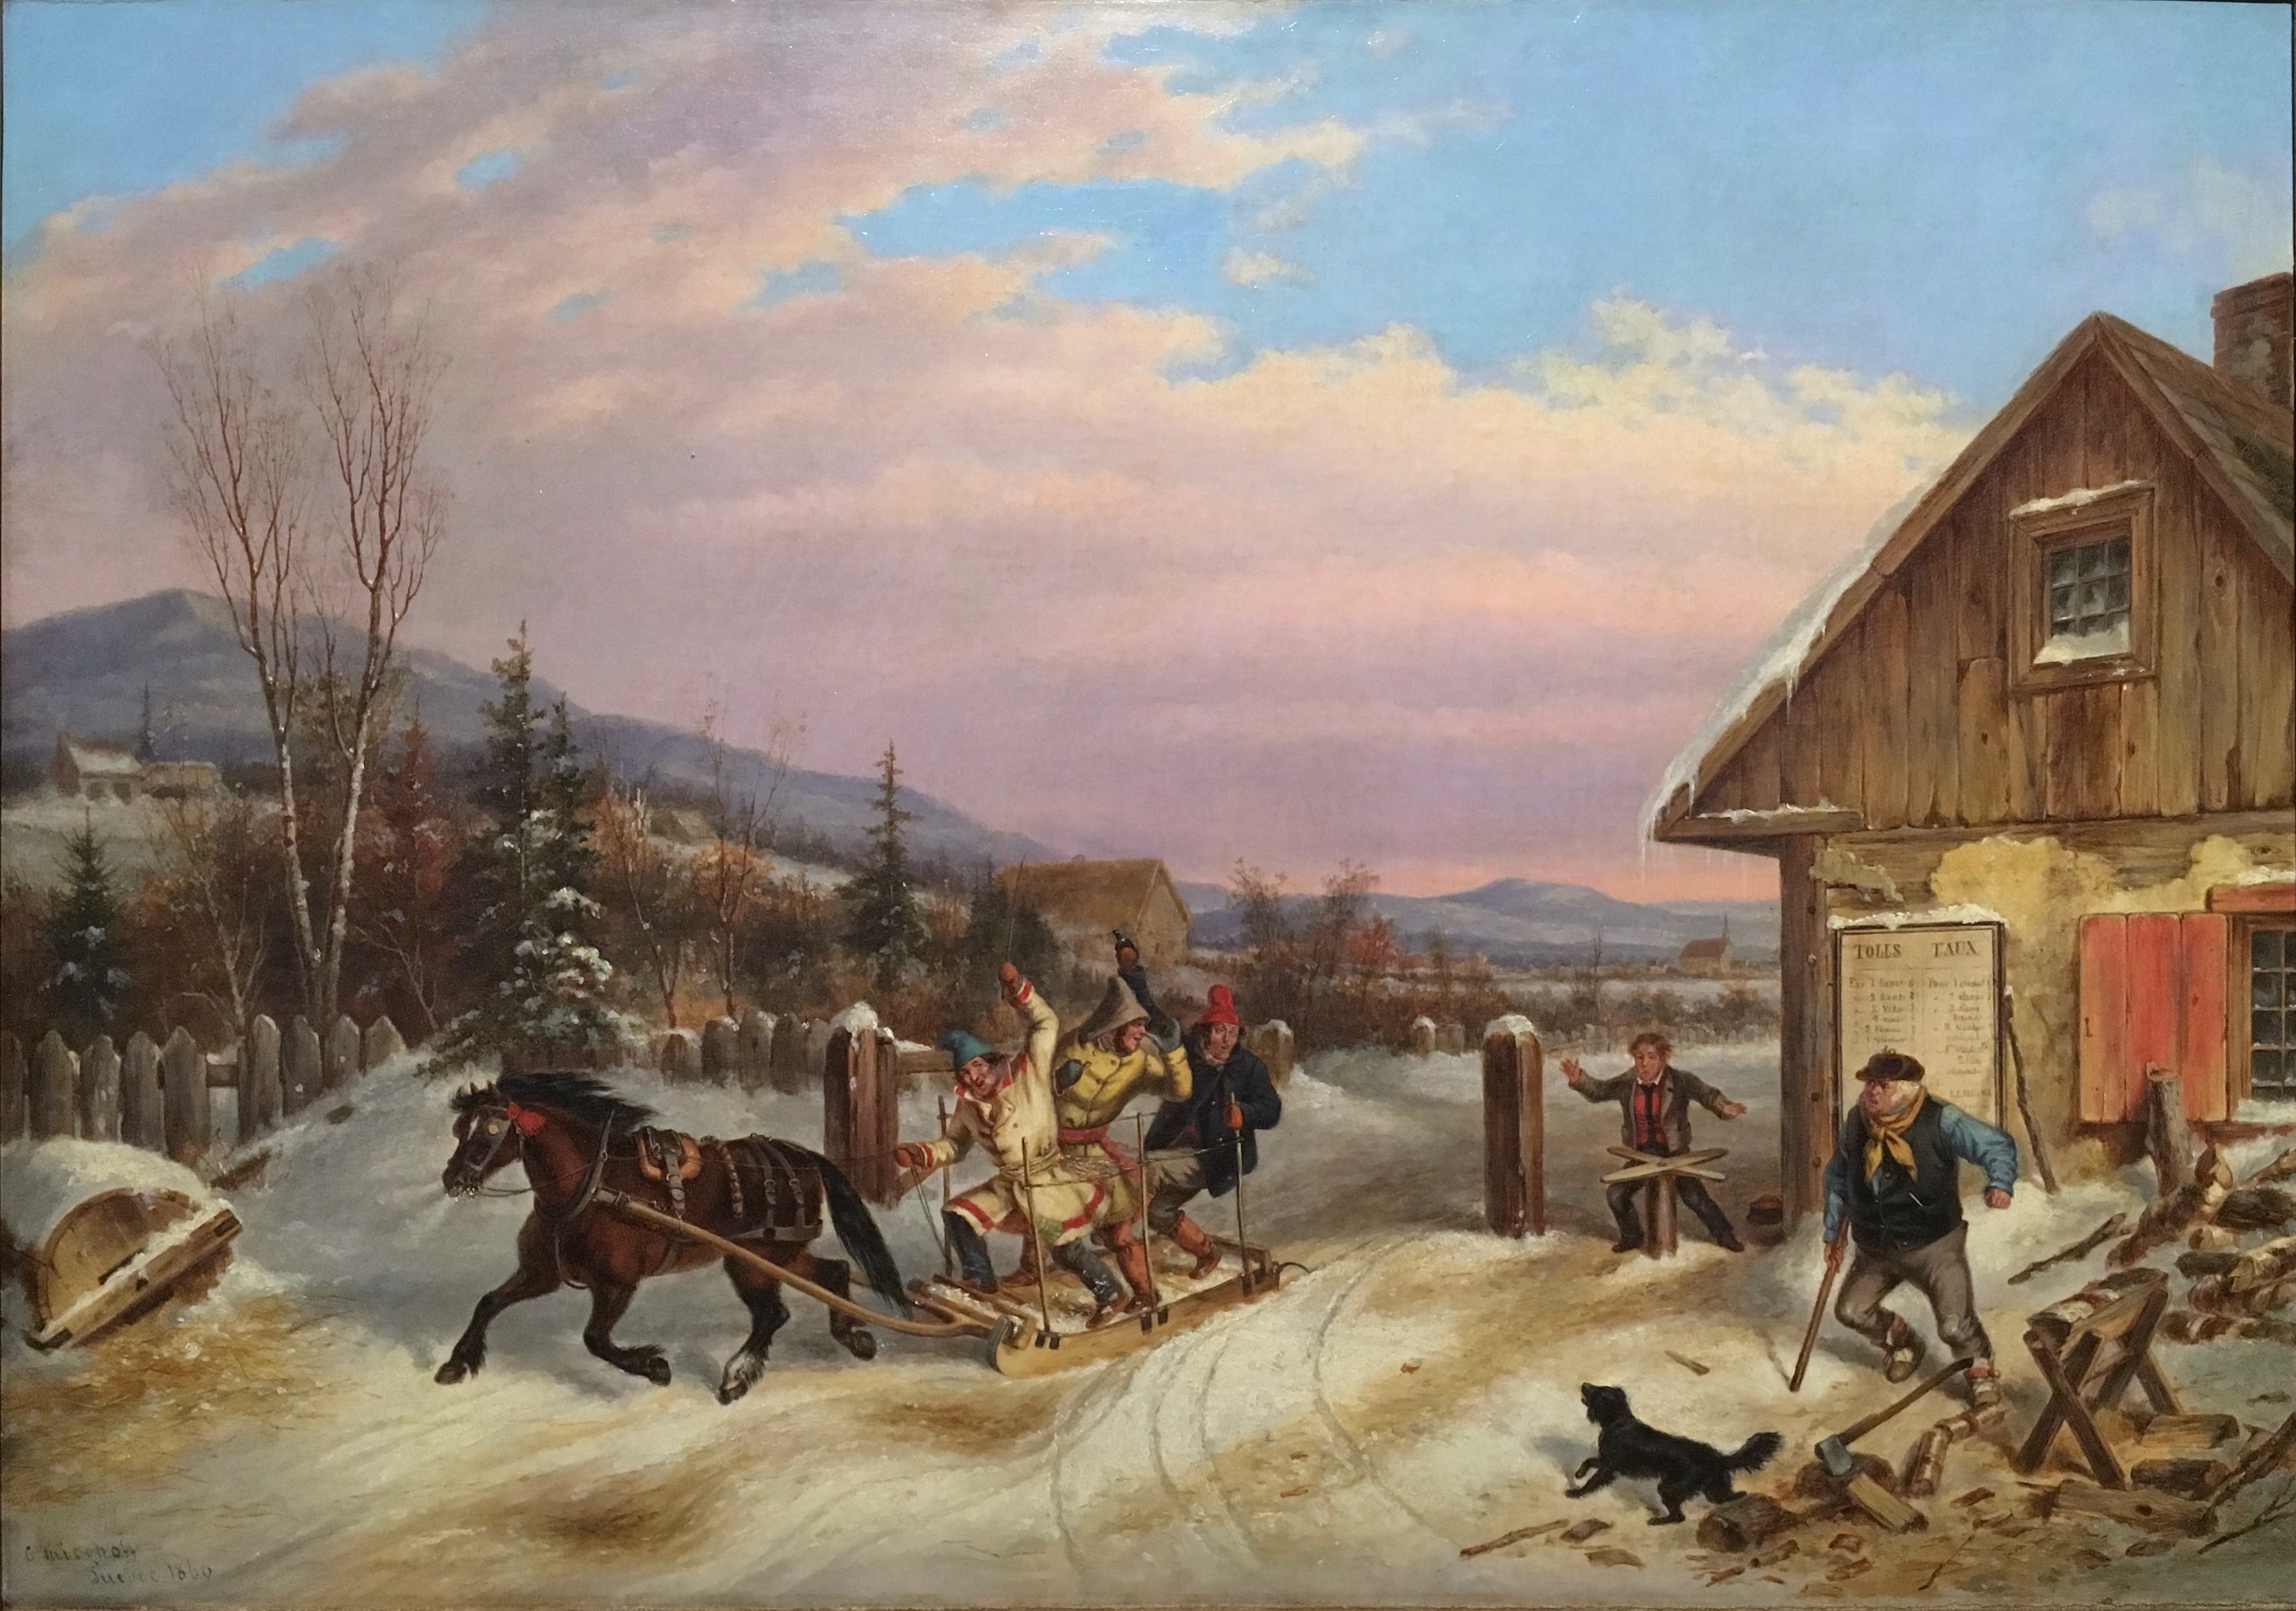 Жульничество на пункте дорожного сбора by Cornelius Krieghoff - 1860 